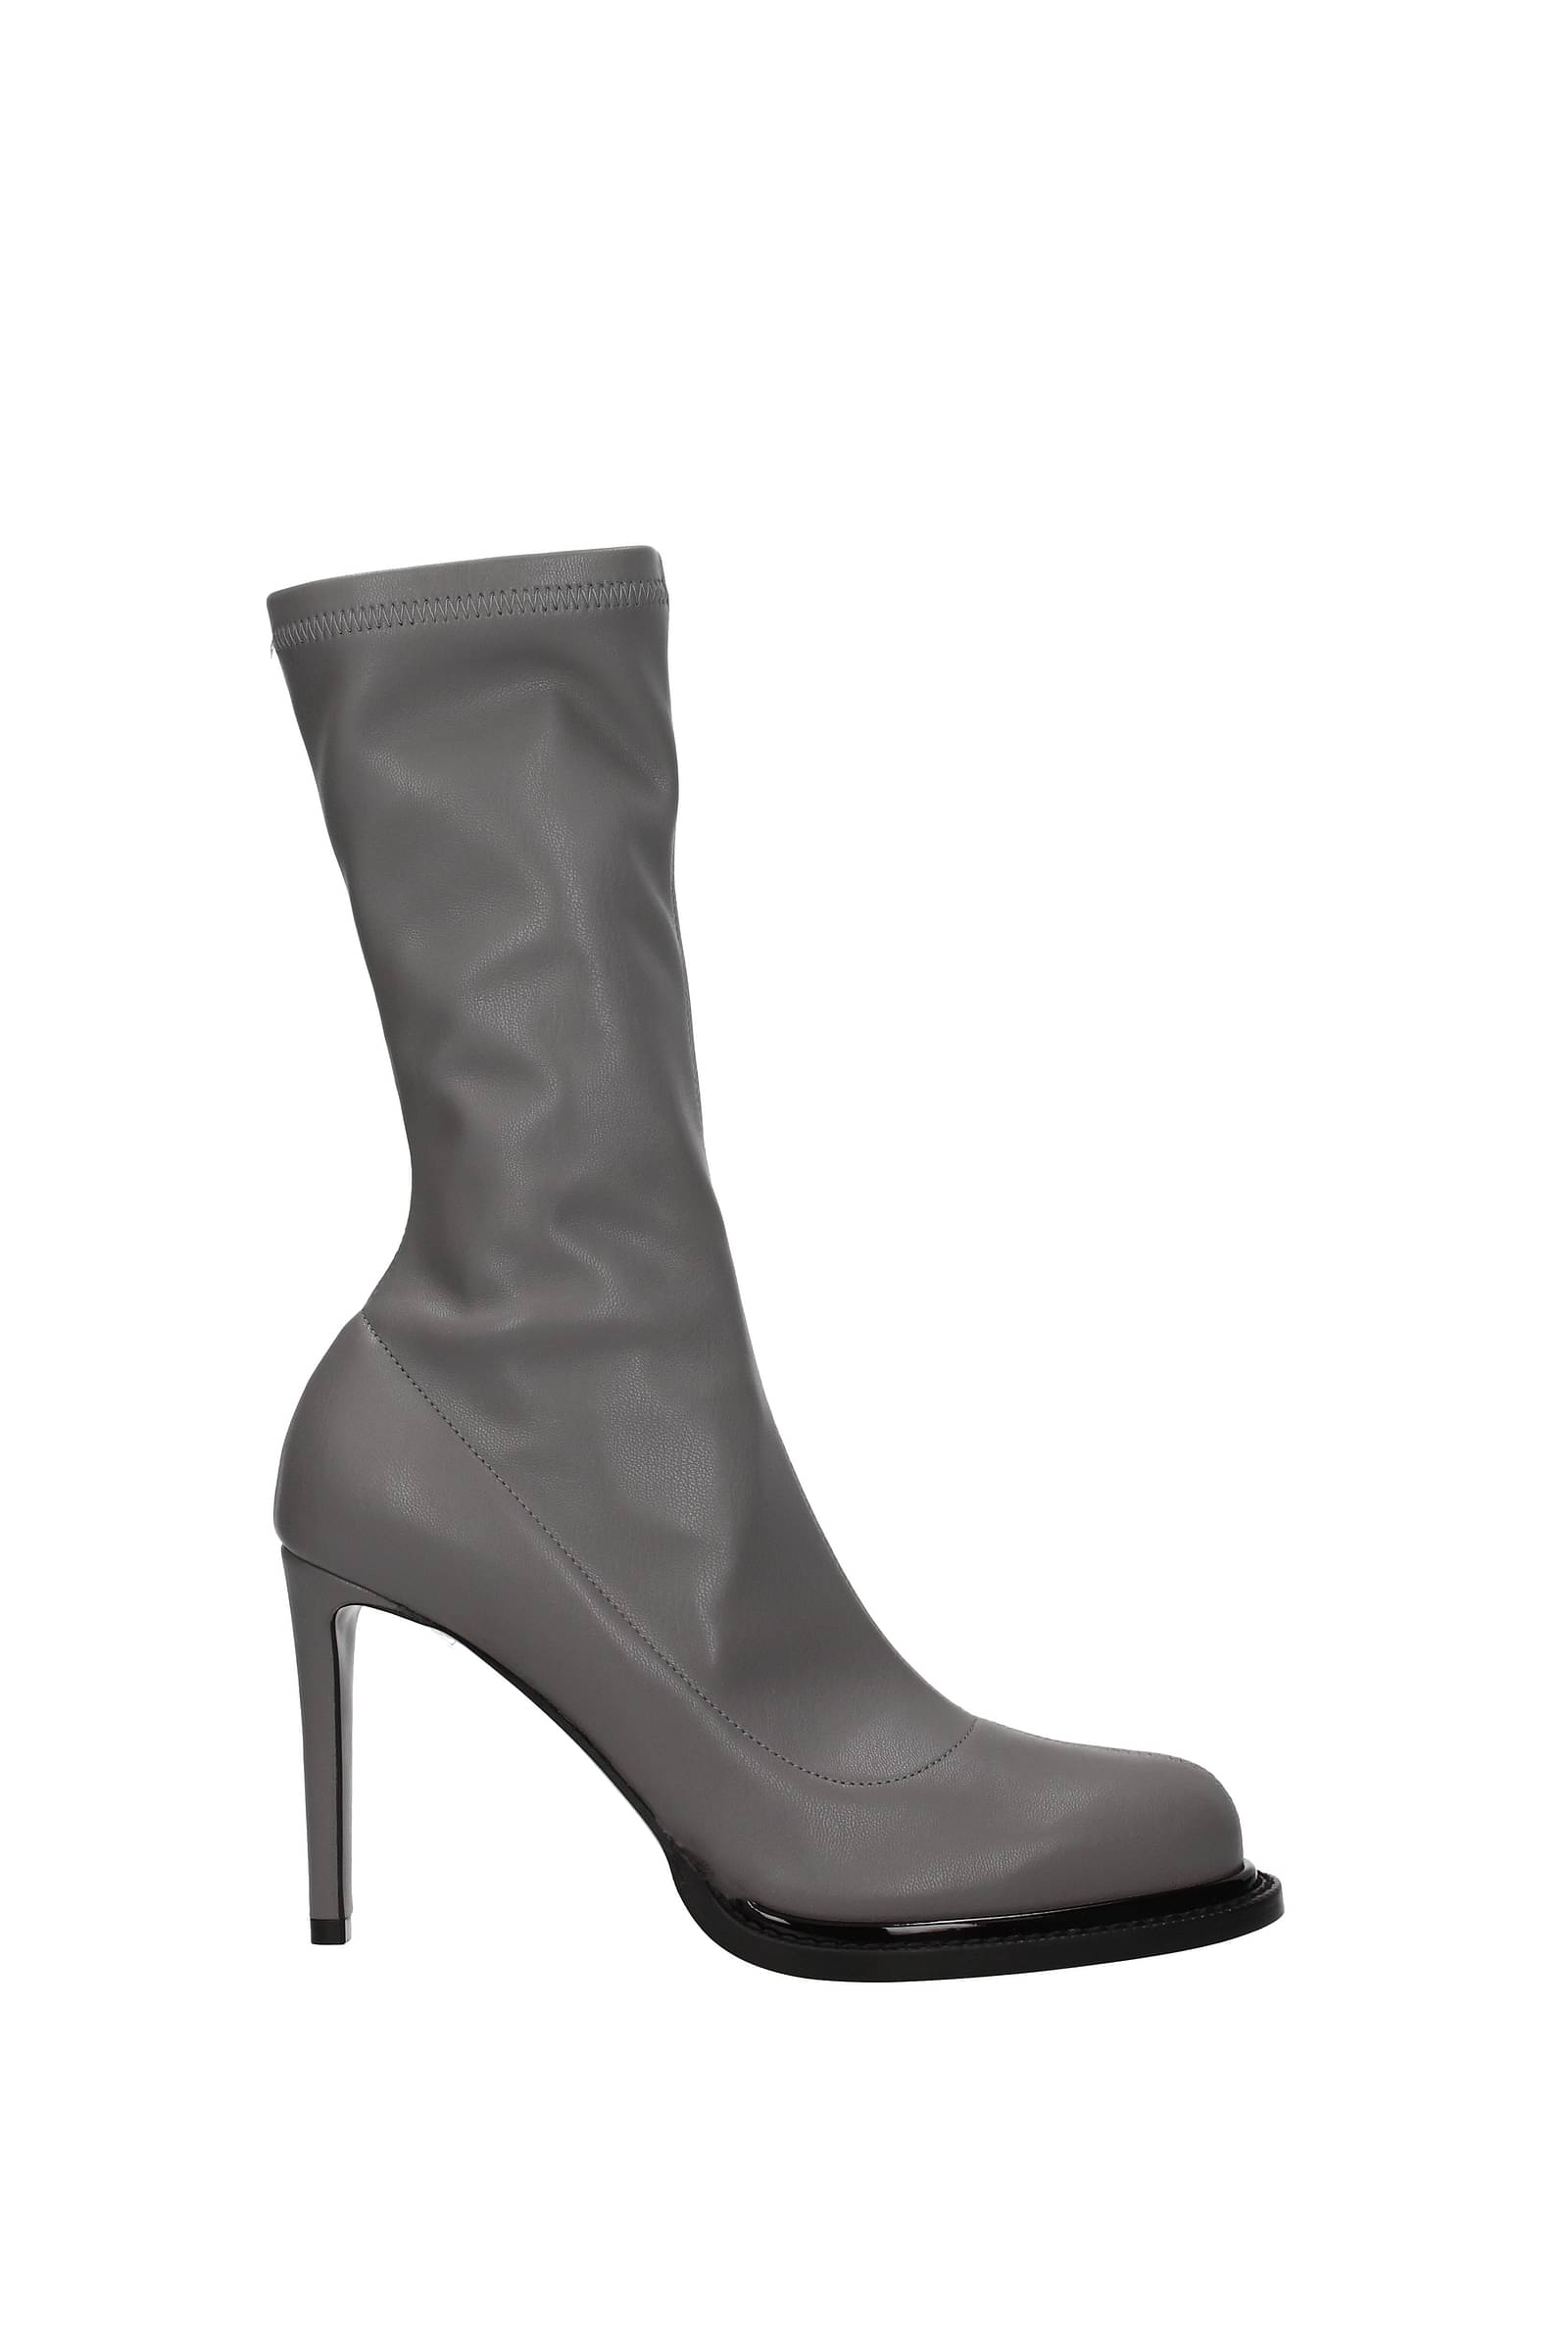 stella mccartney grey boots